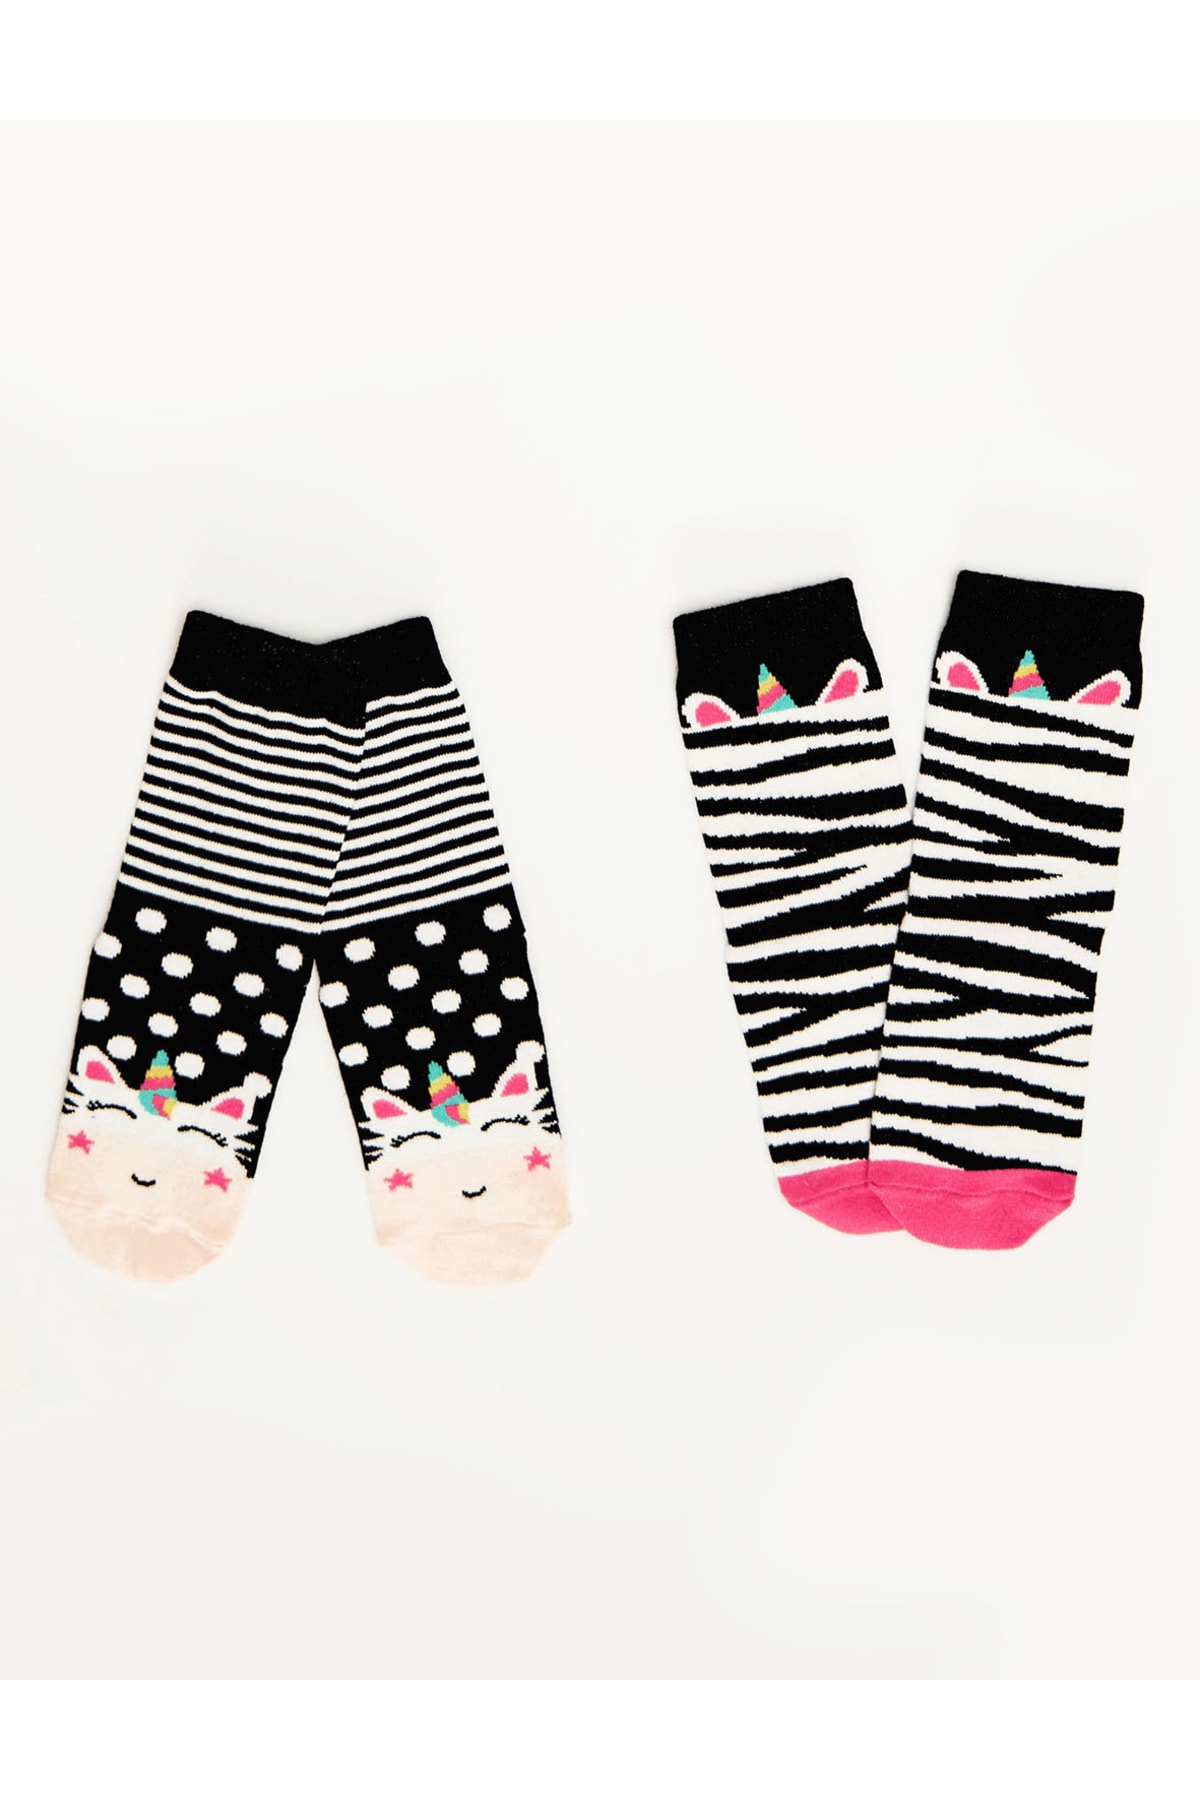 Denokids Zebra Unicorn Girls' Striped Black And White Crewneck Socks 2 Pairs Set